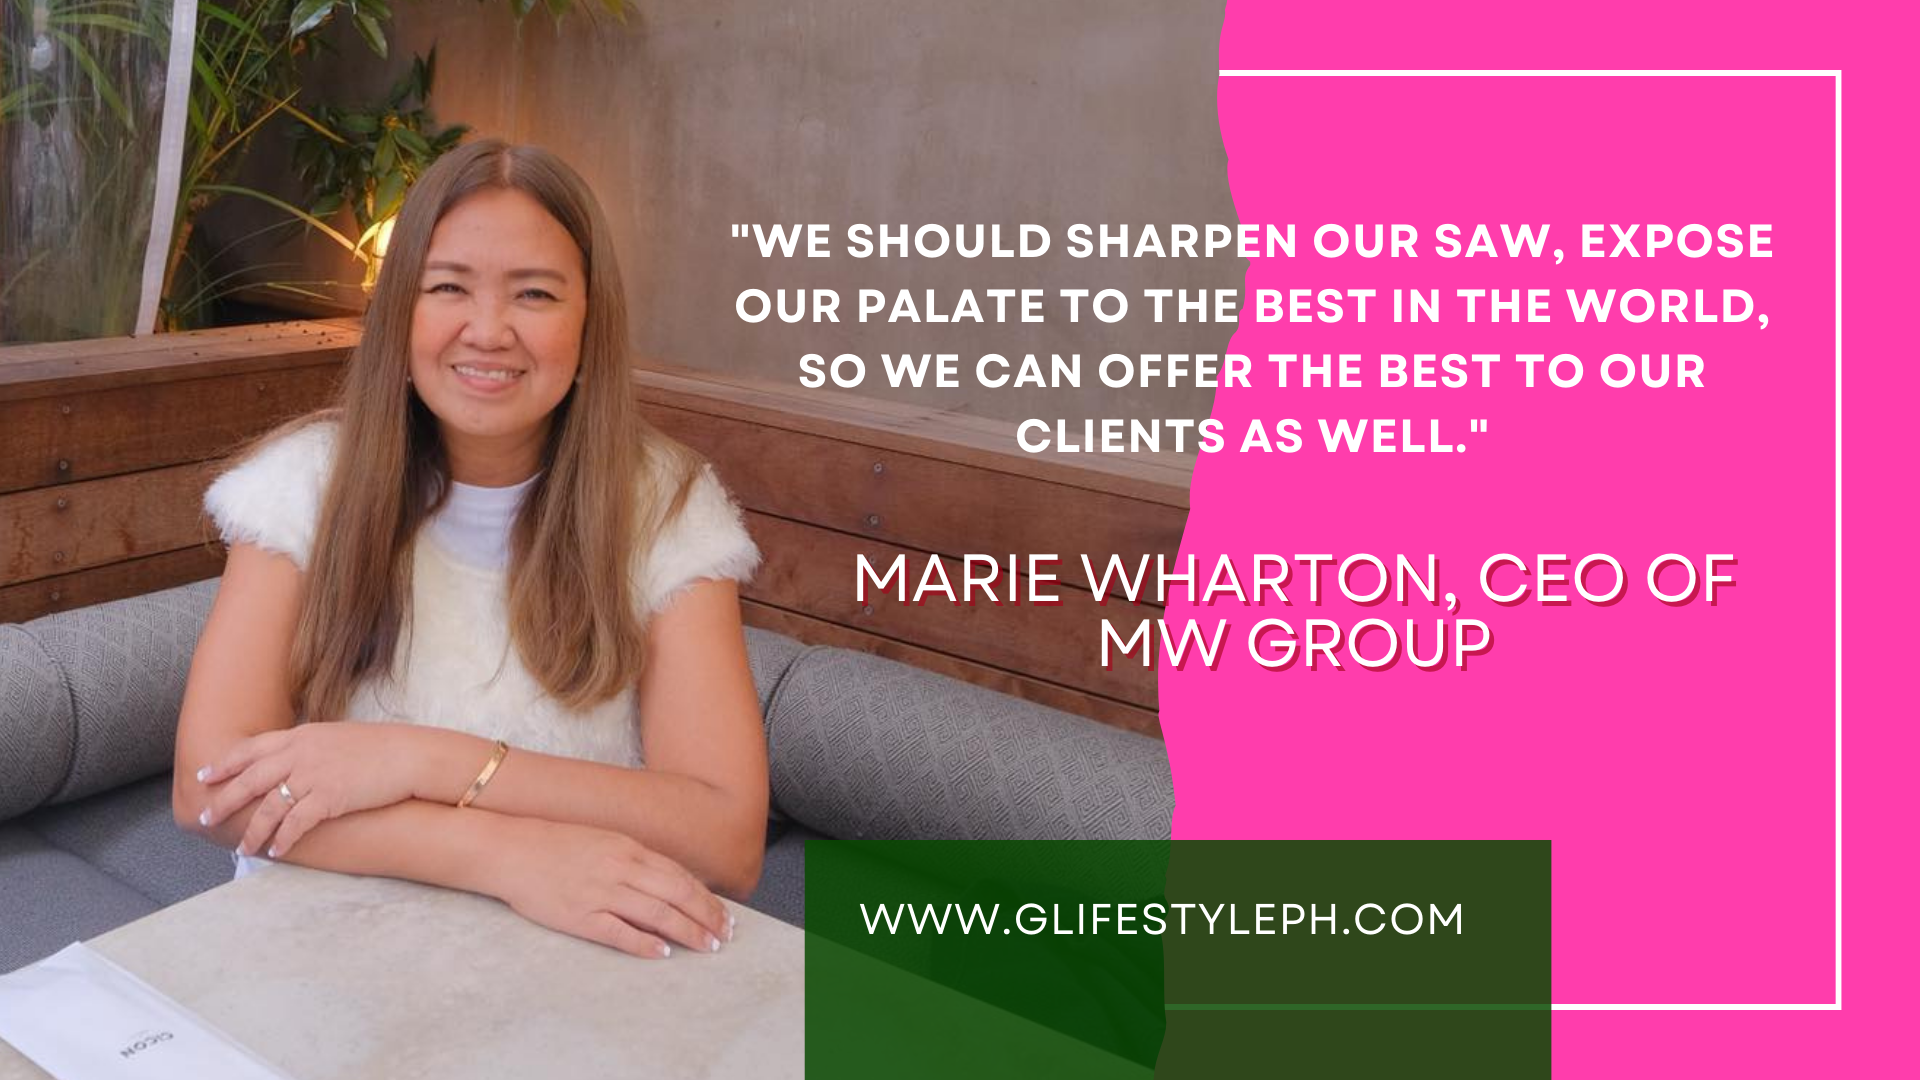 Marie Wharton, CEO of MW Group